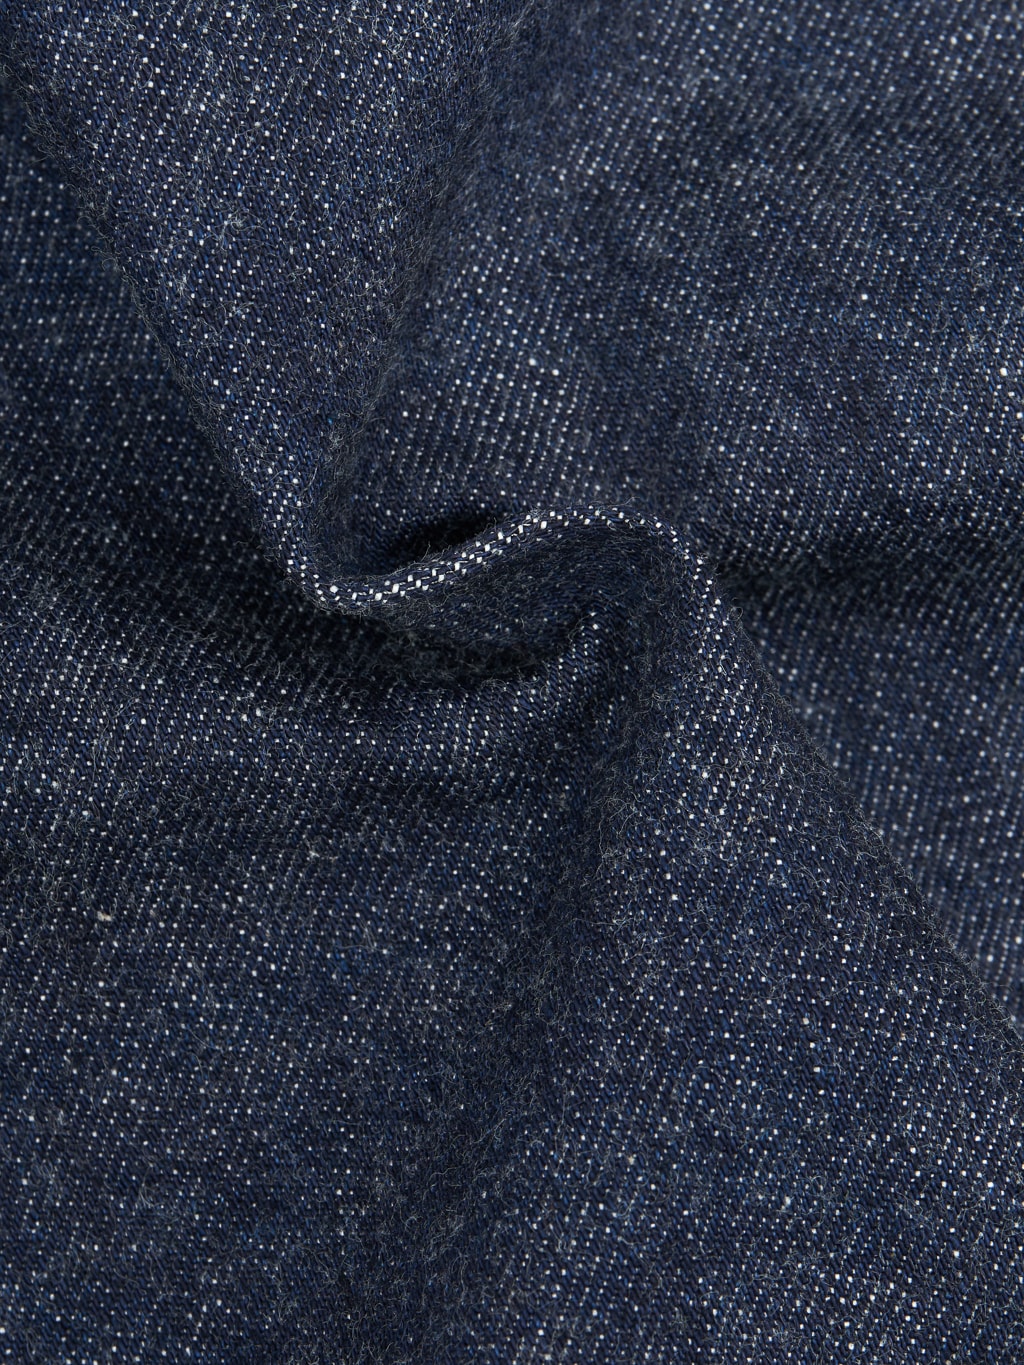 fullcount 2102 type 2 denim jacket selvedge texture